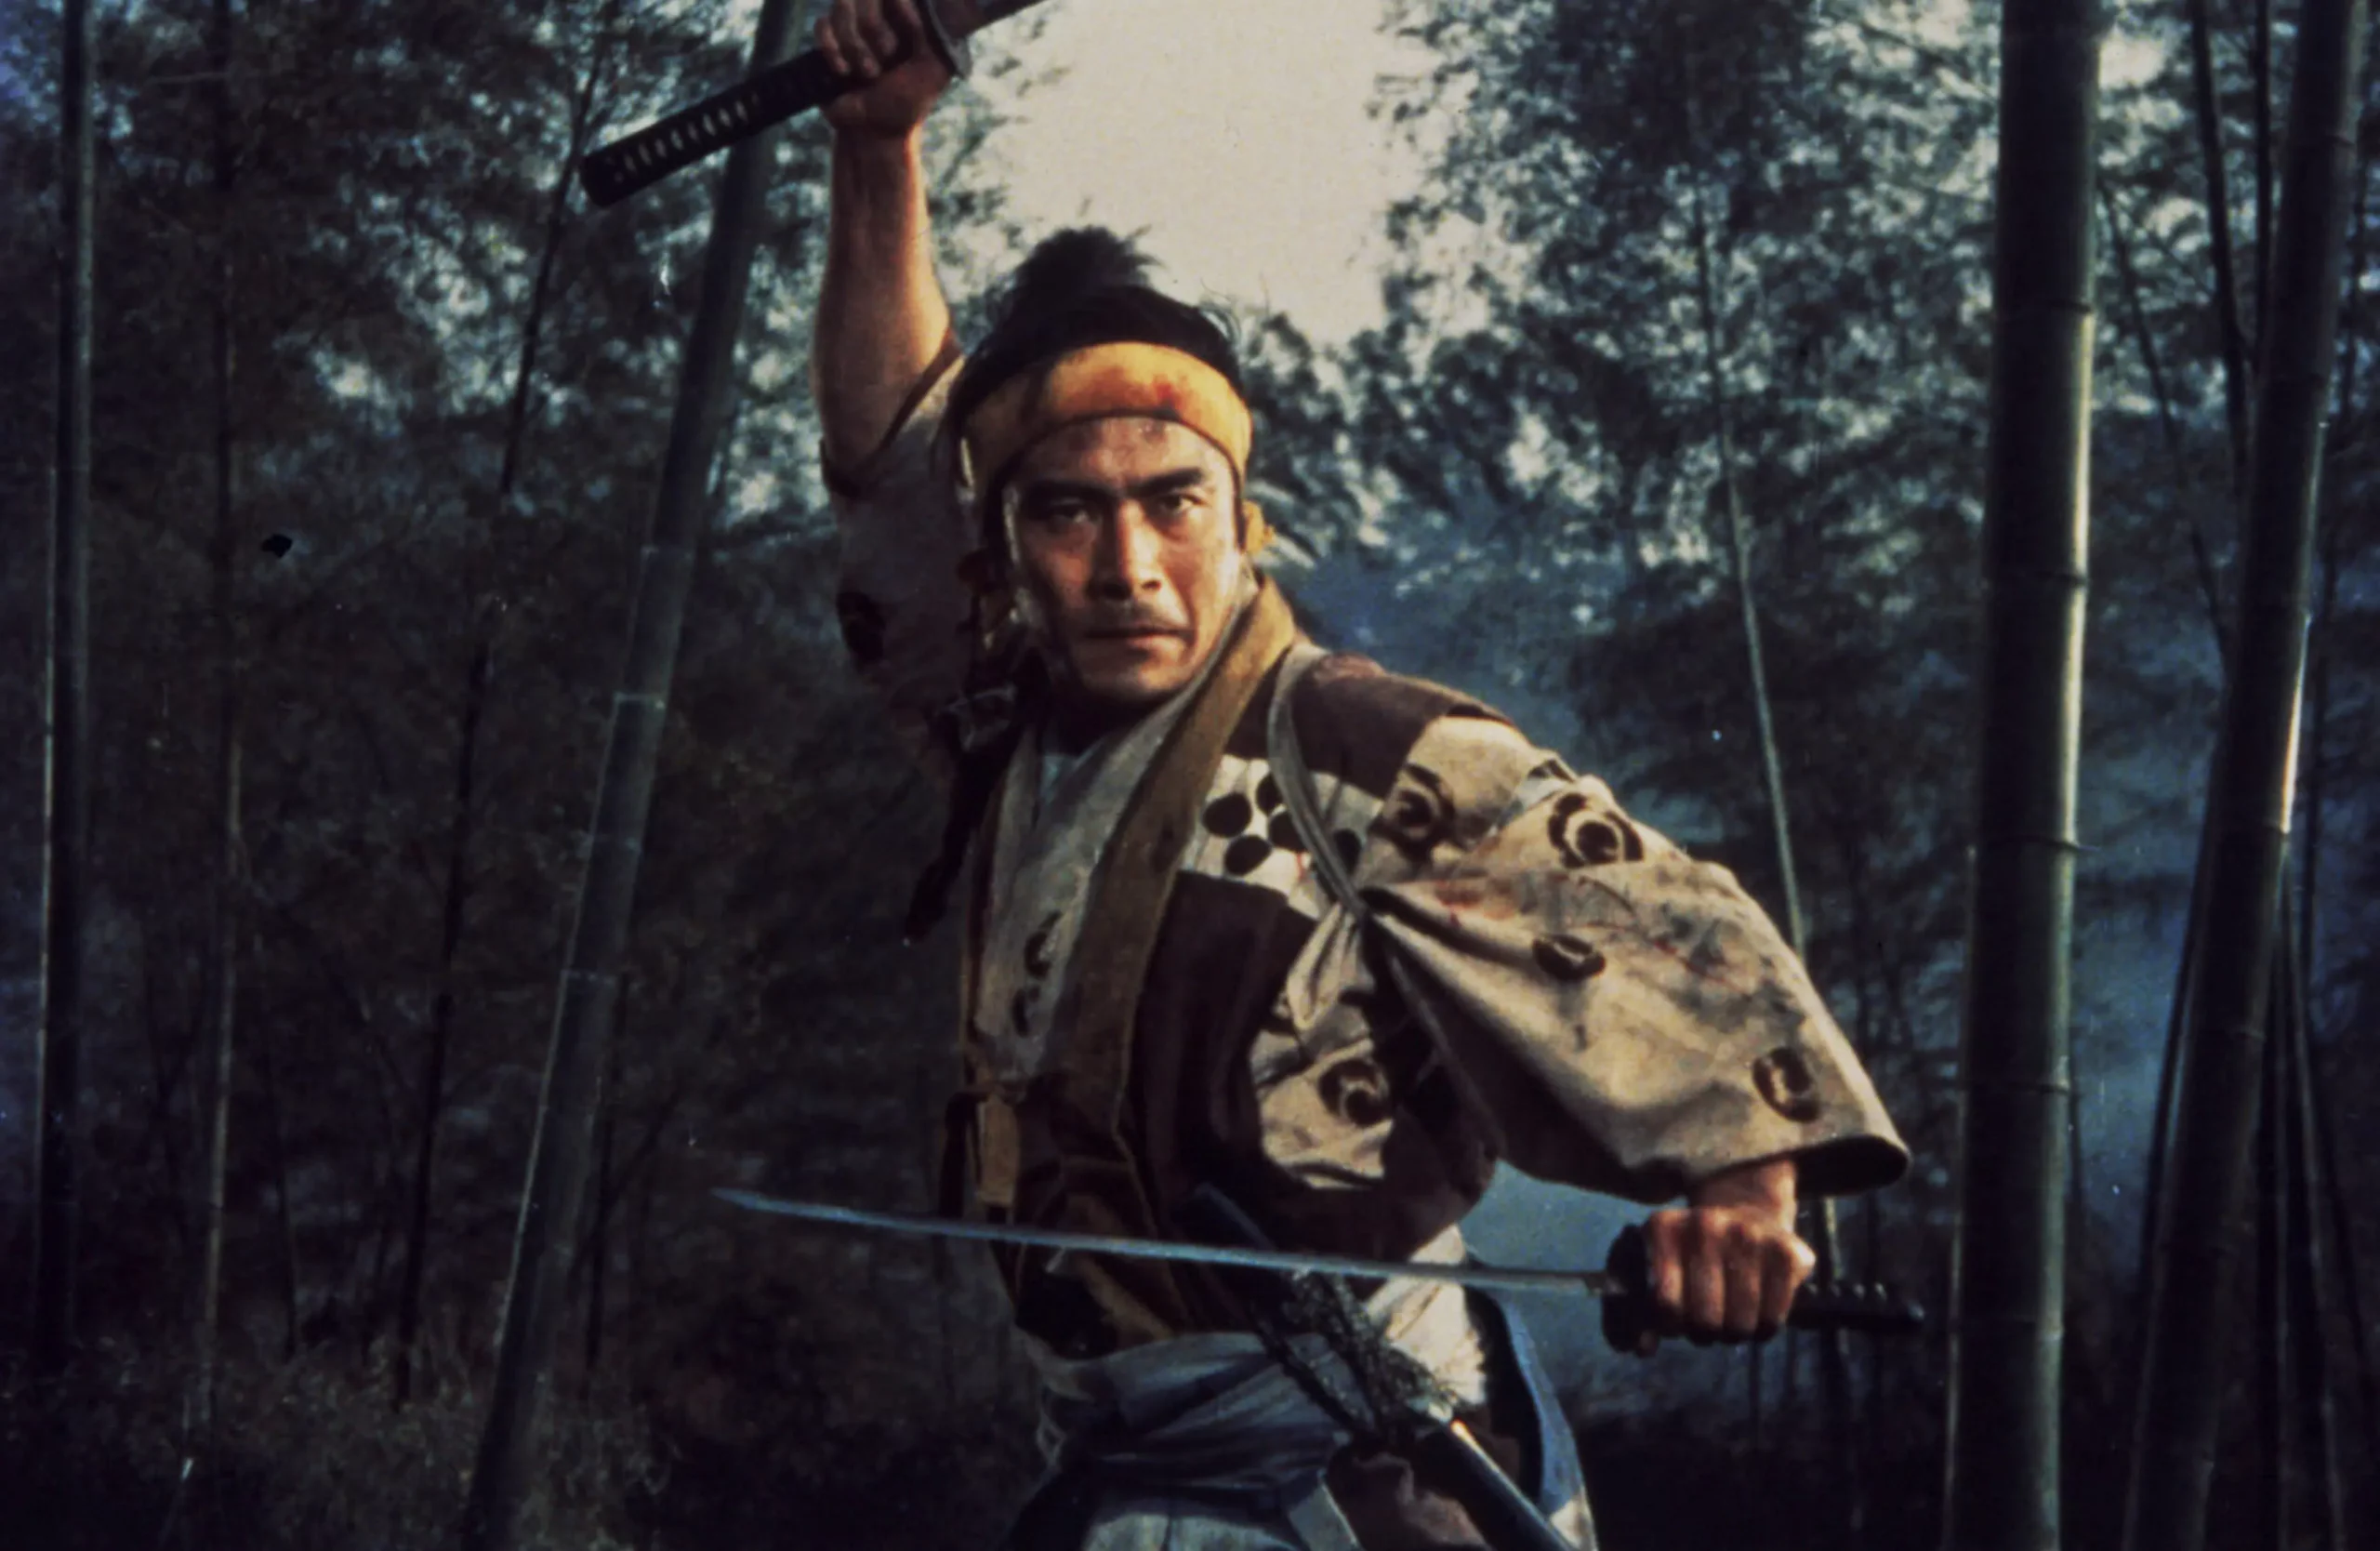 Samurai Trilogy (Hiroshi Inagaki, Japan)